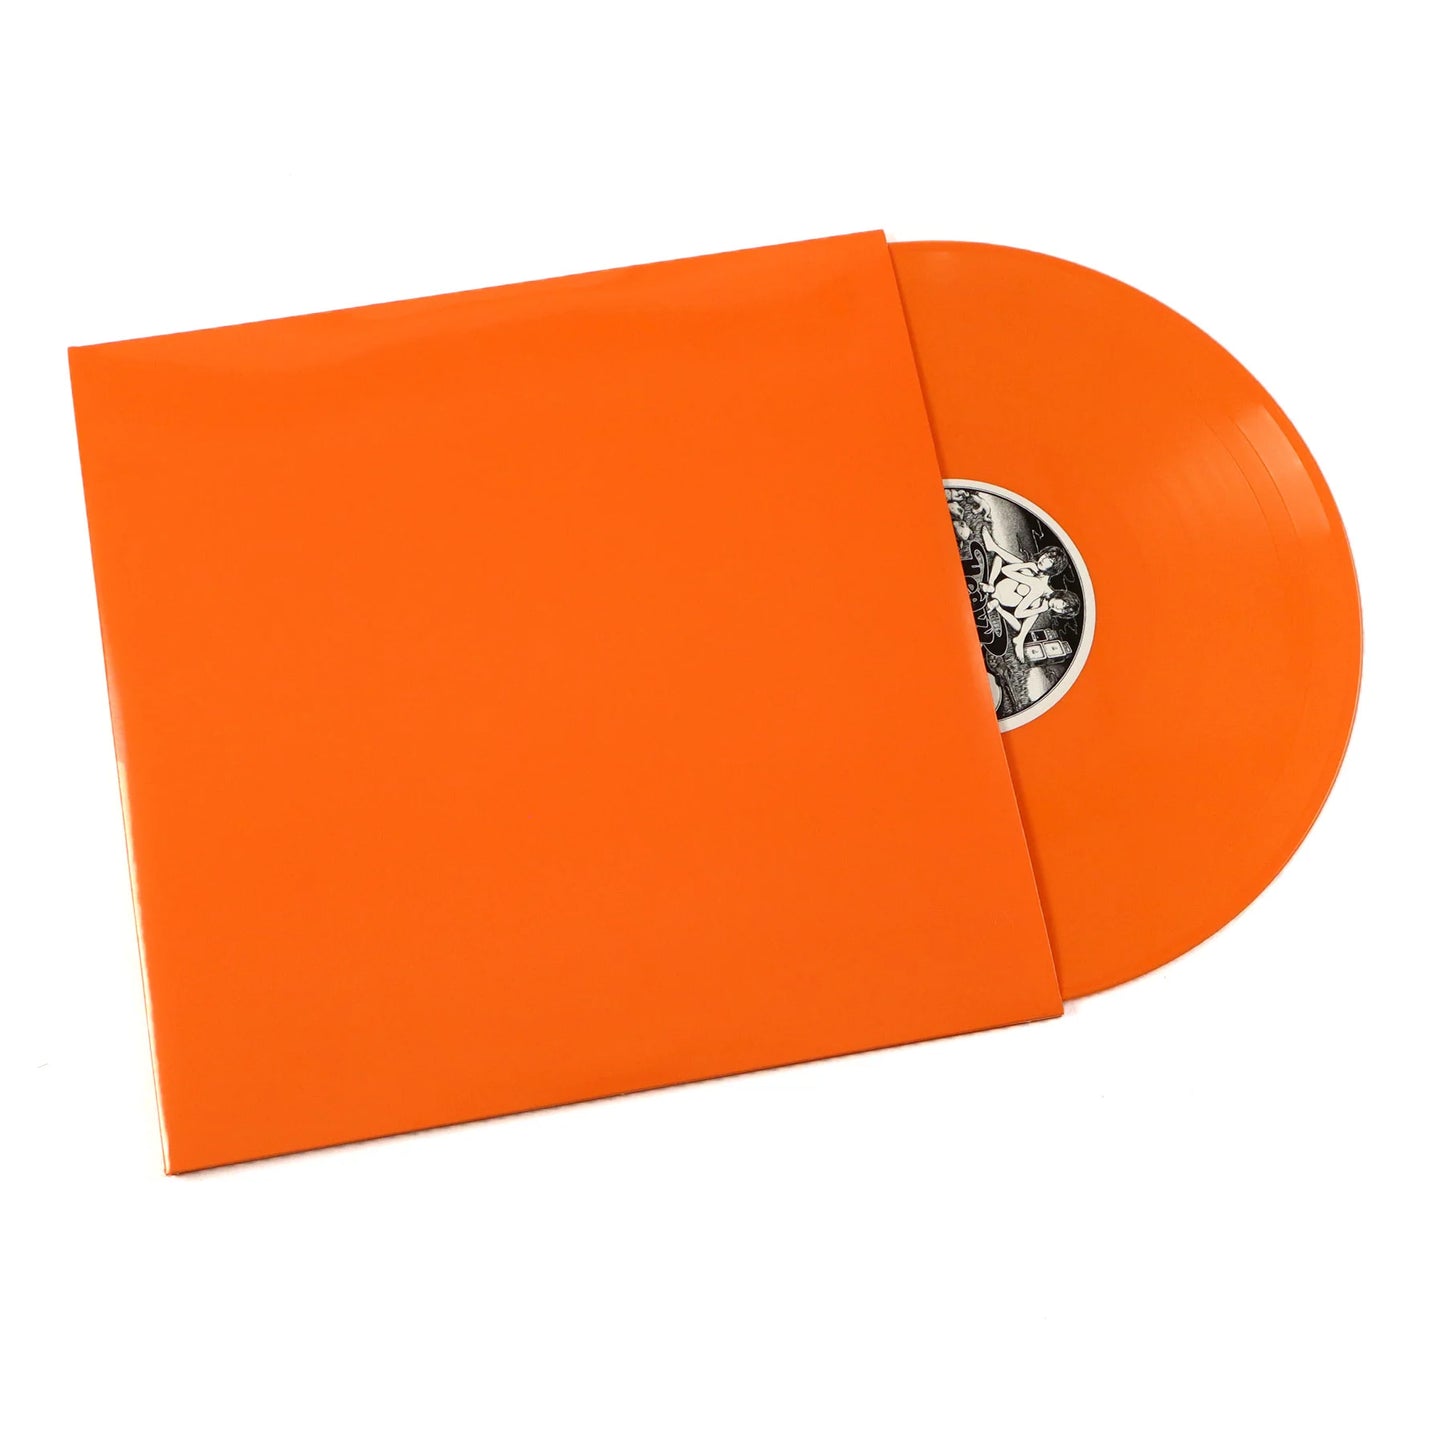 Boris - Heavy Rocks 2020 (Limited Edition on Double Orange Vinyl)